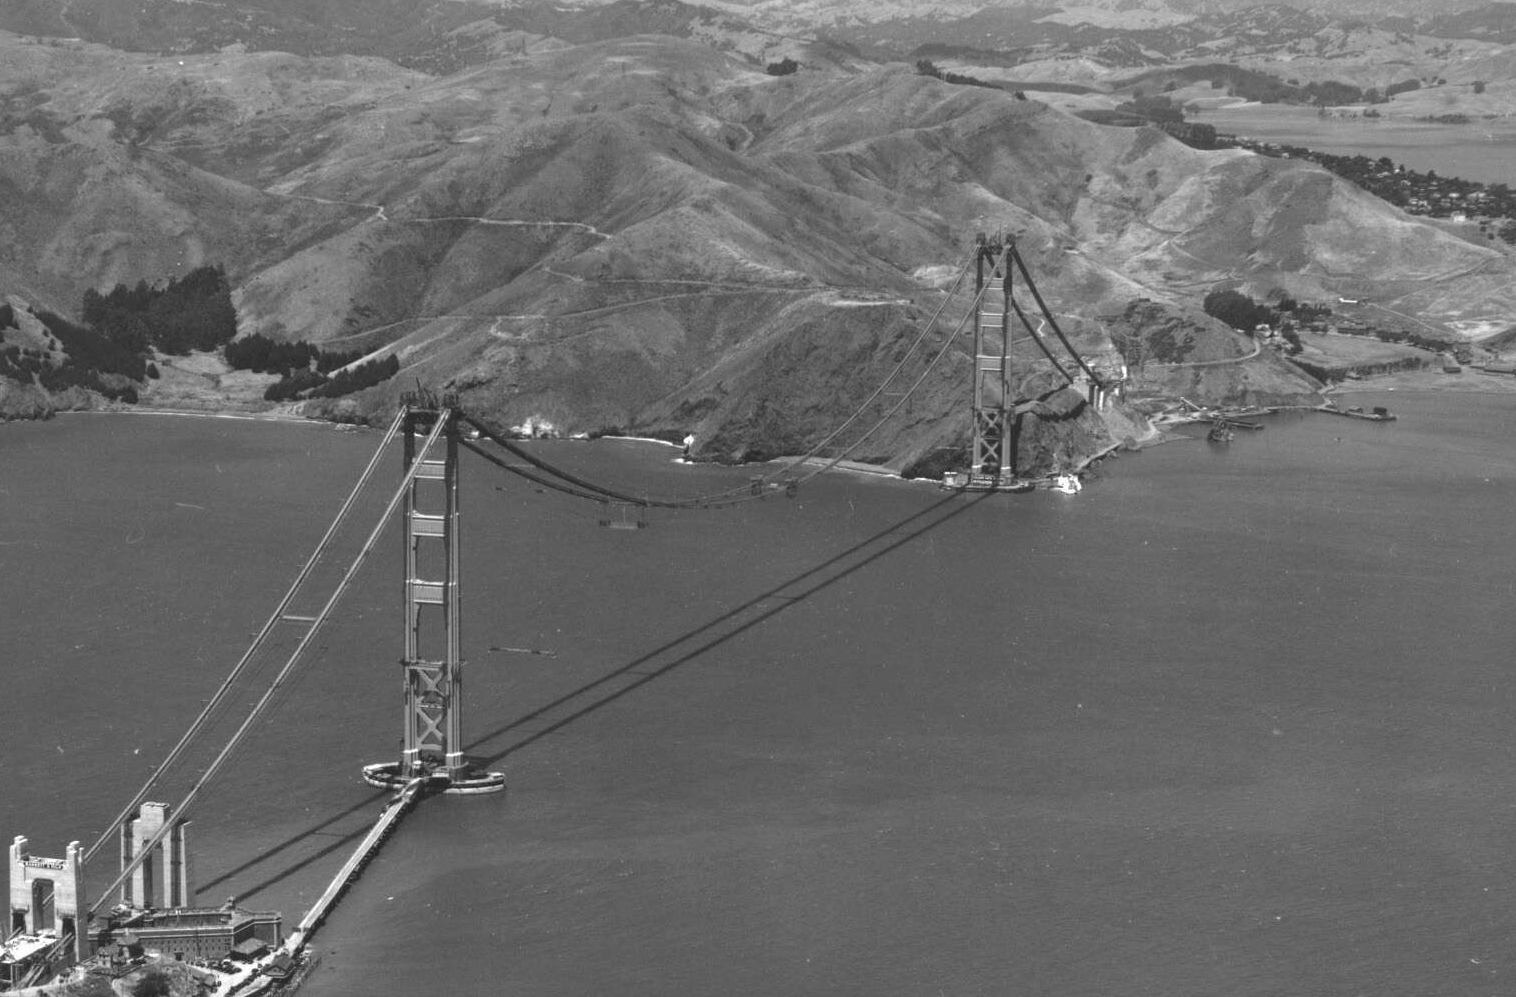 Construction of the Golden Gate Bridge